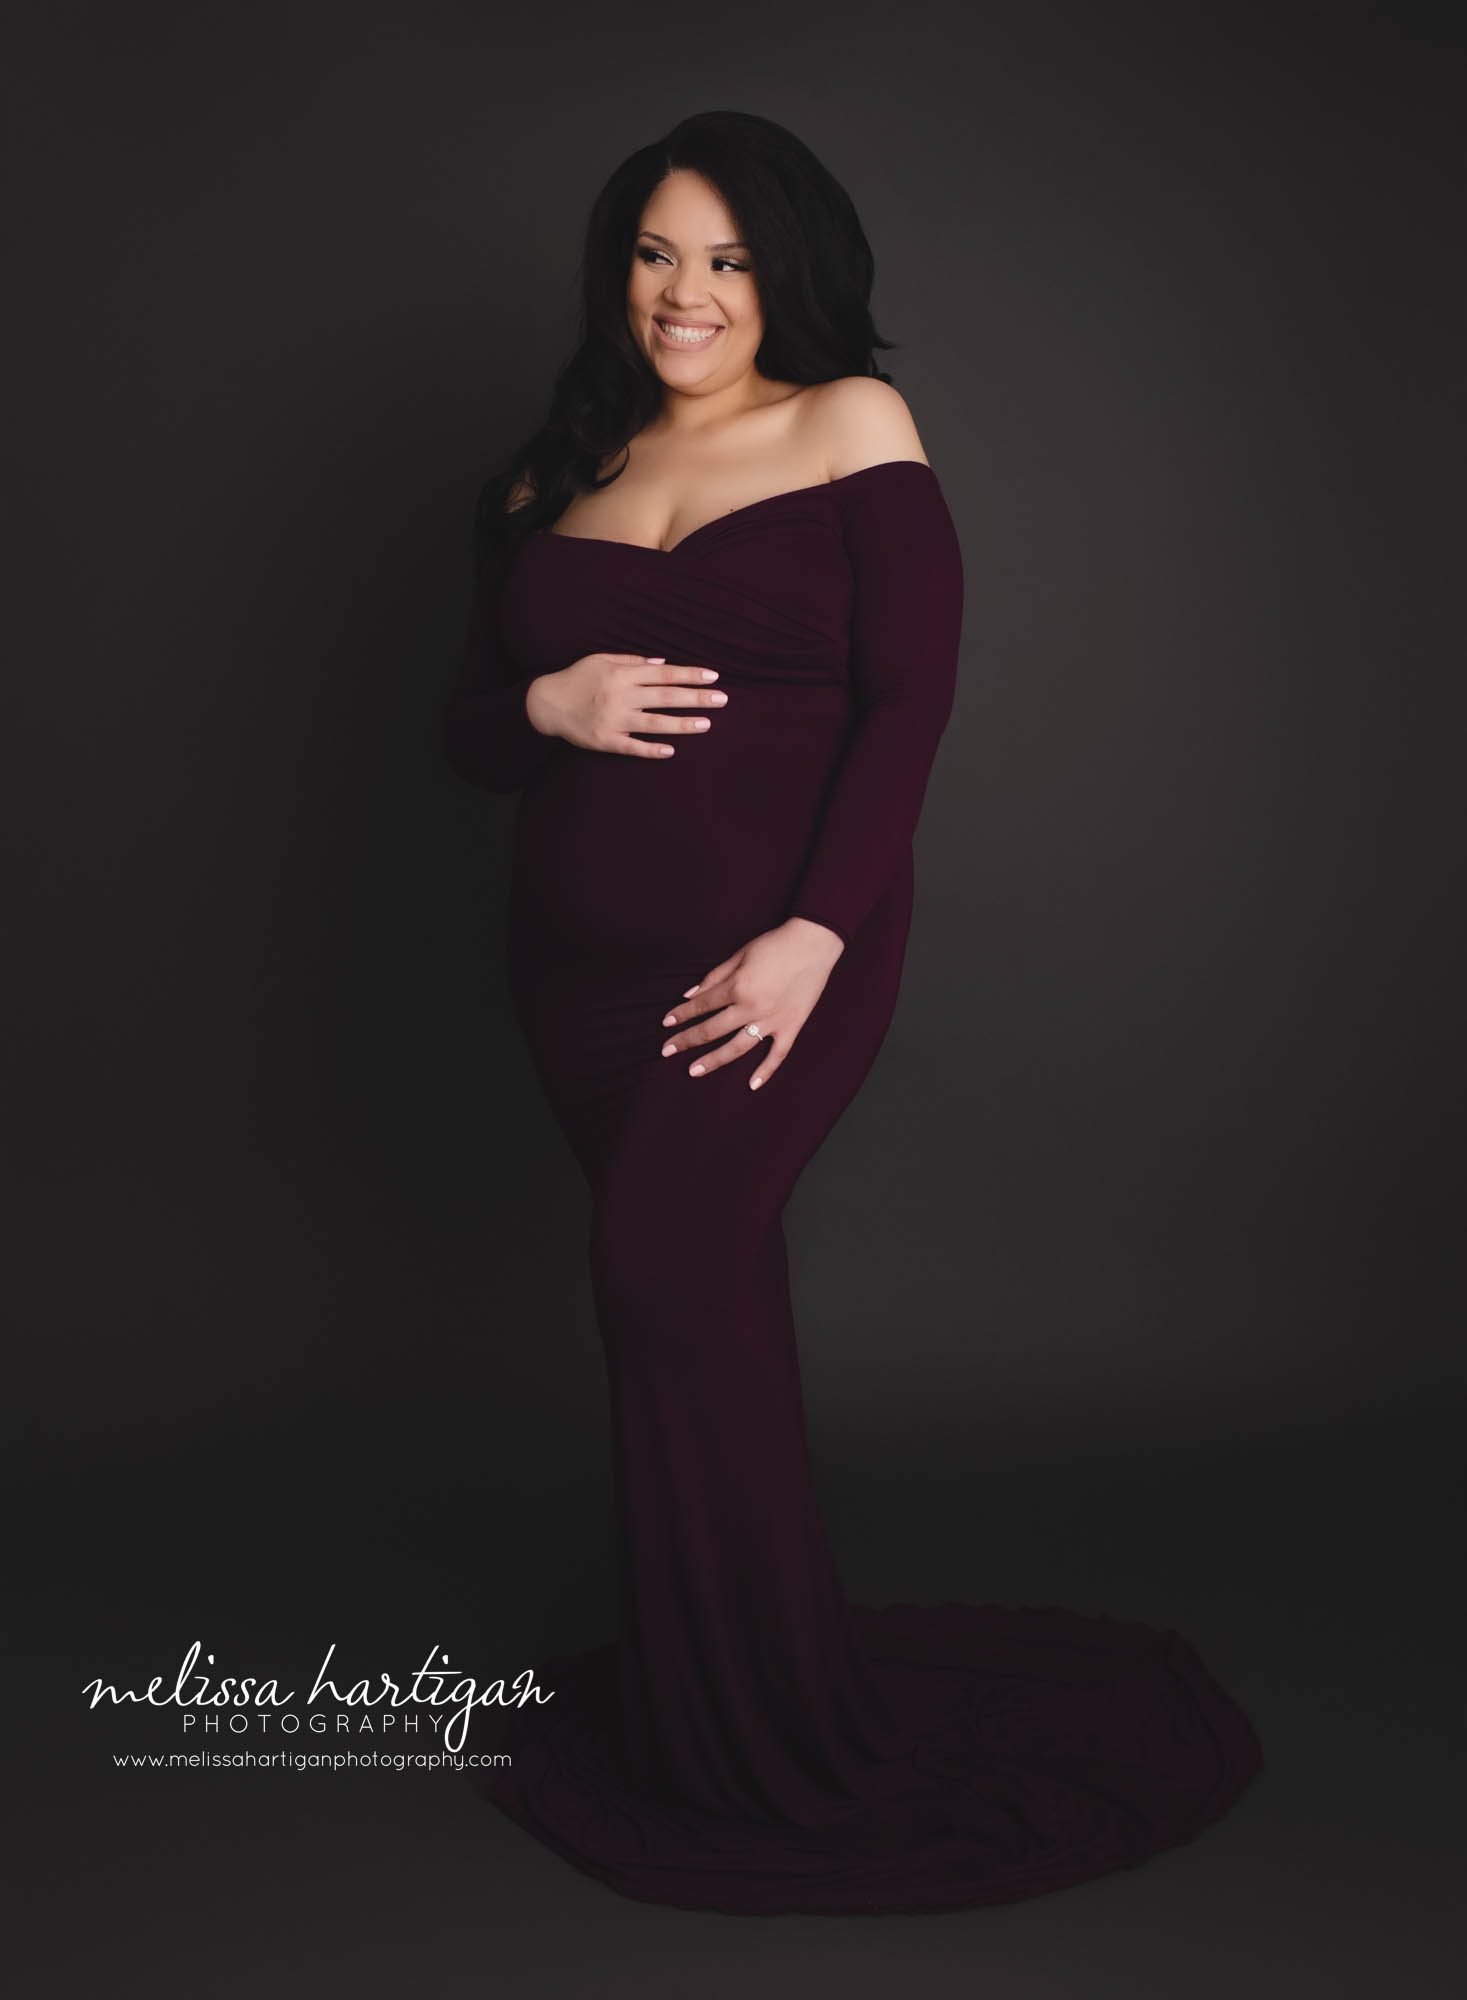 mom smiling holding baby bump melissa hartigan photography maternity photographer hartford county CT